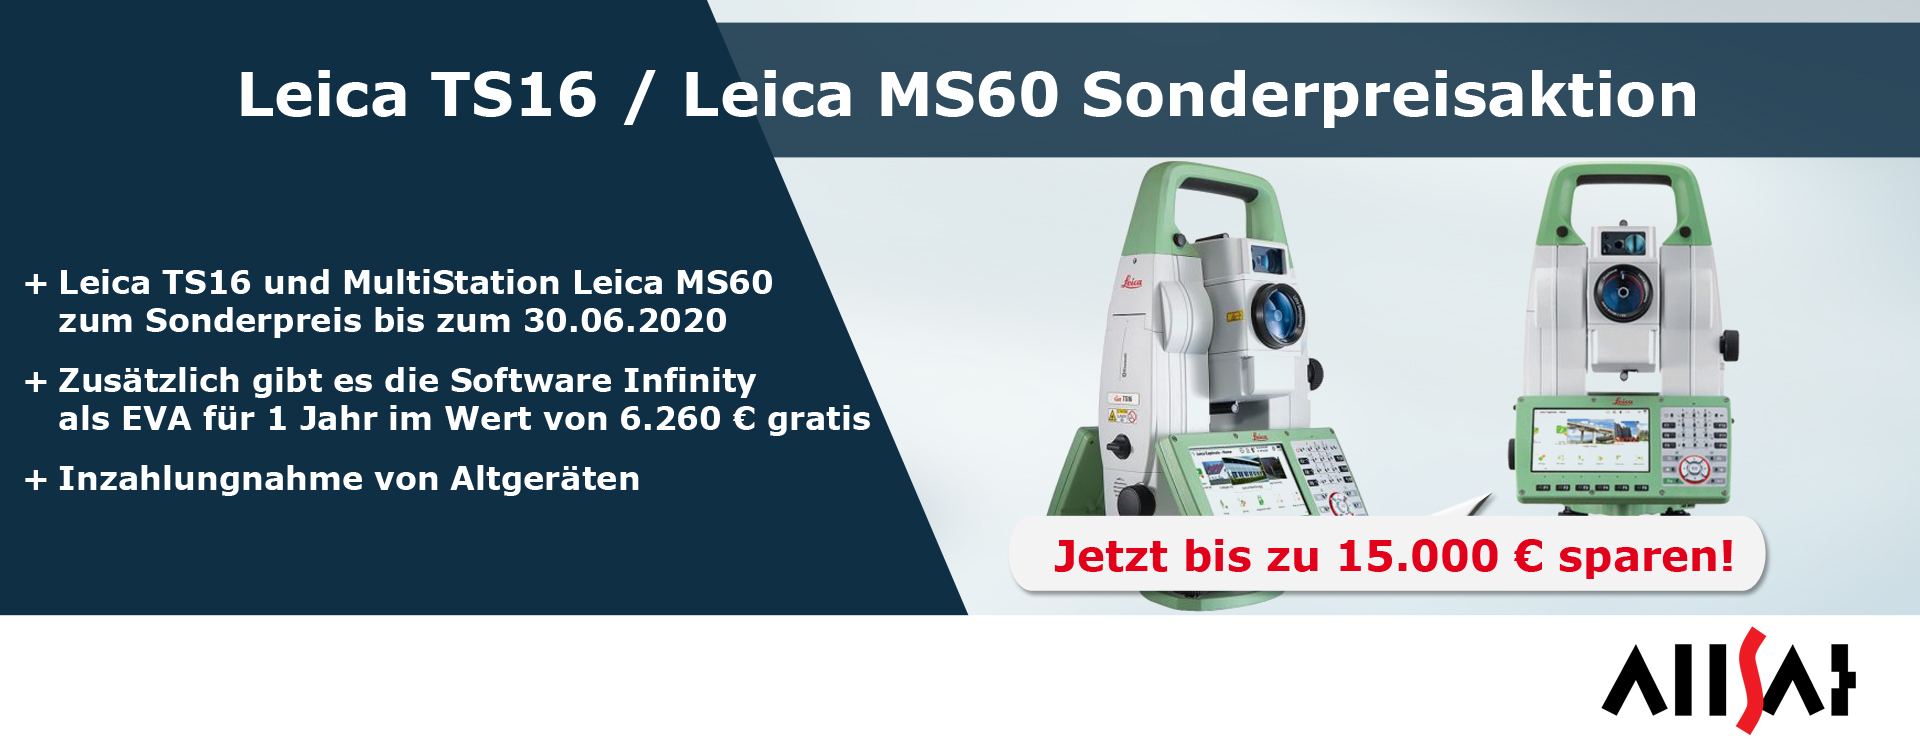 TS16/MS60 Sonderpreisaktion Banner Allsat